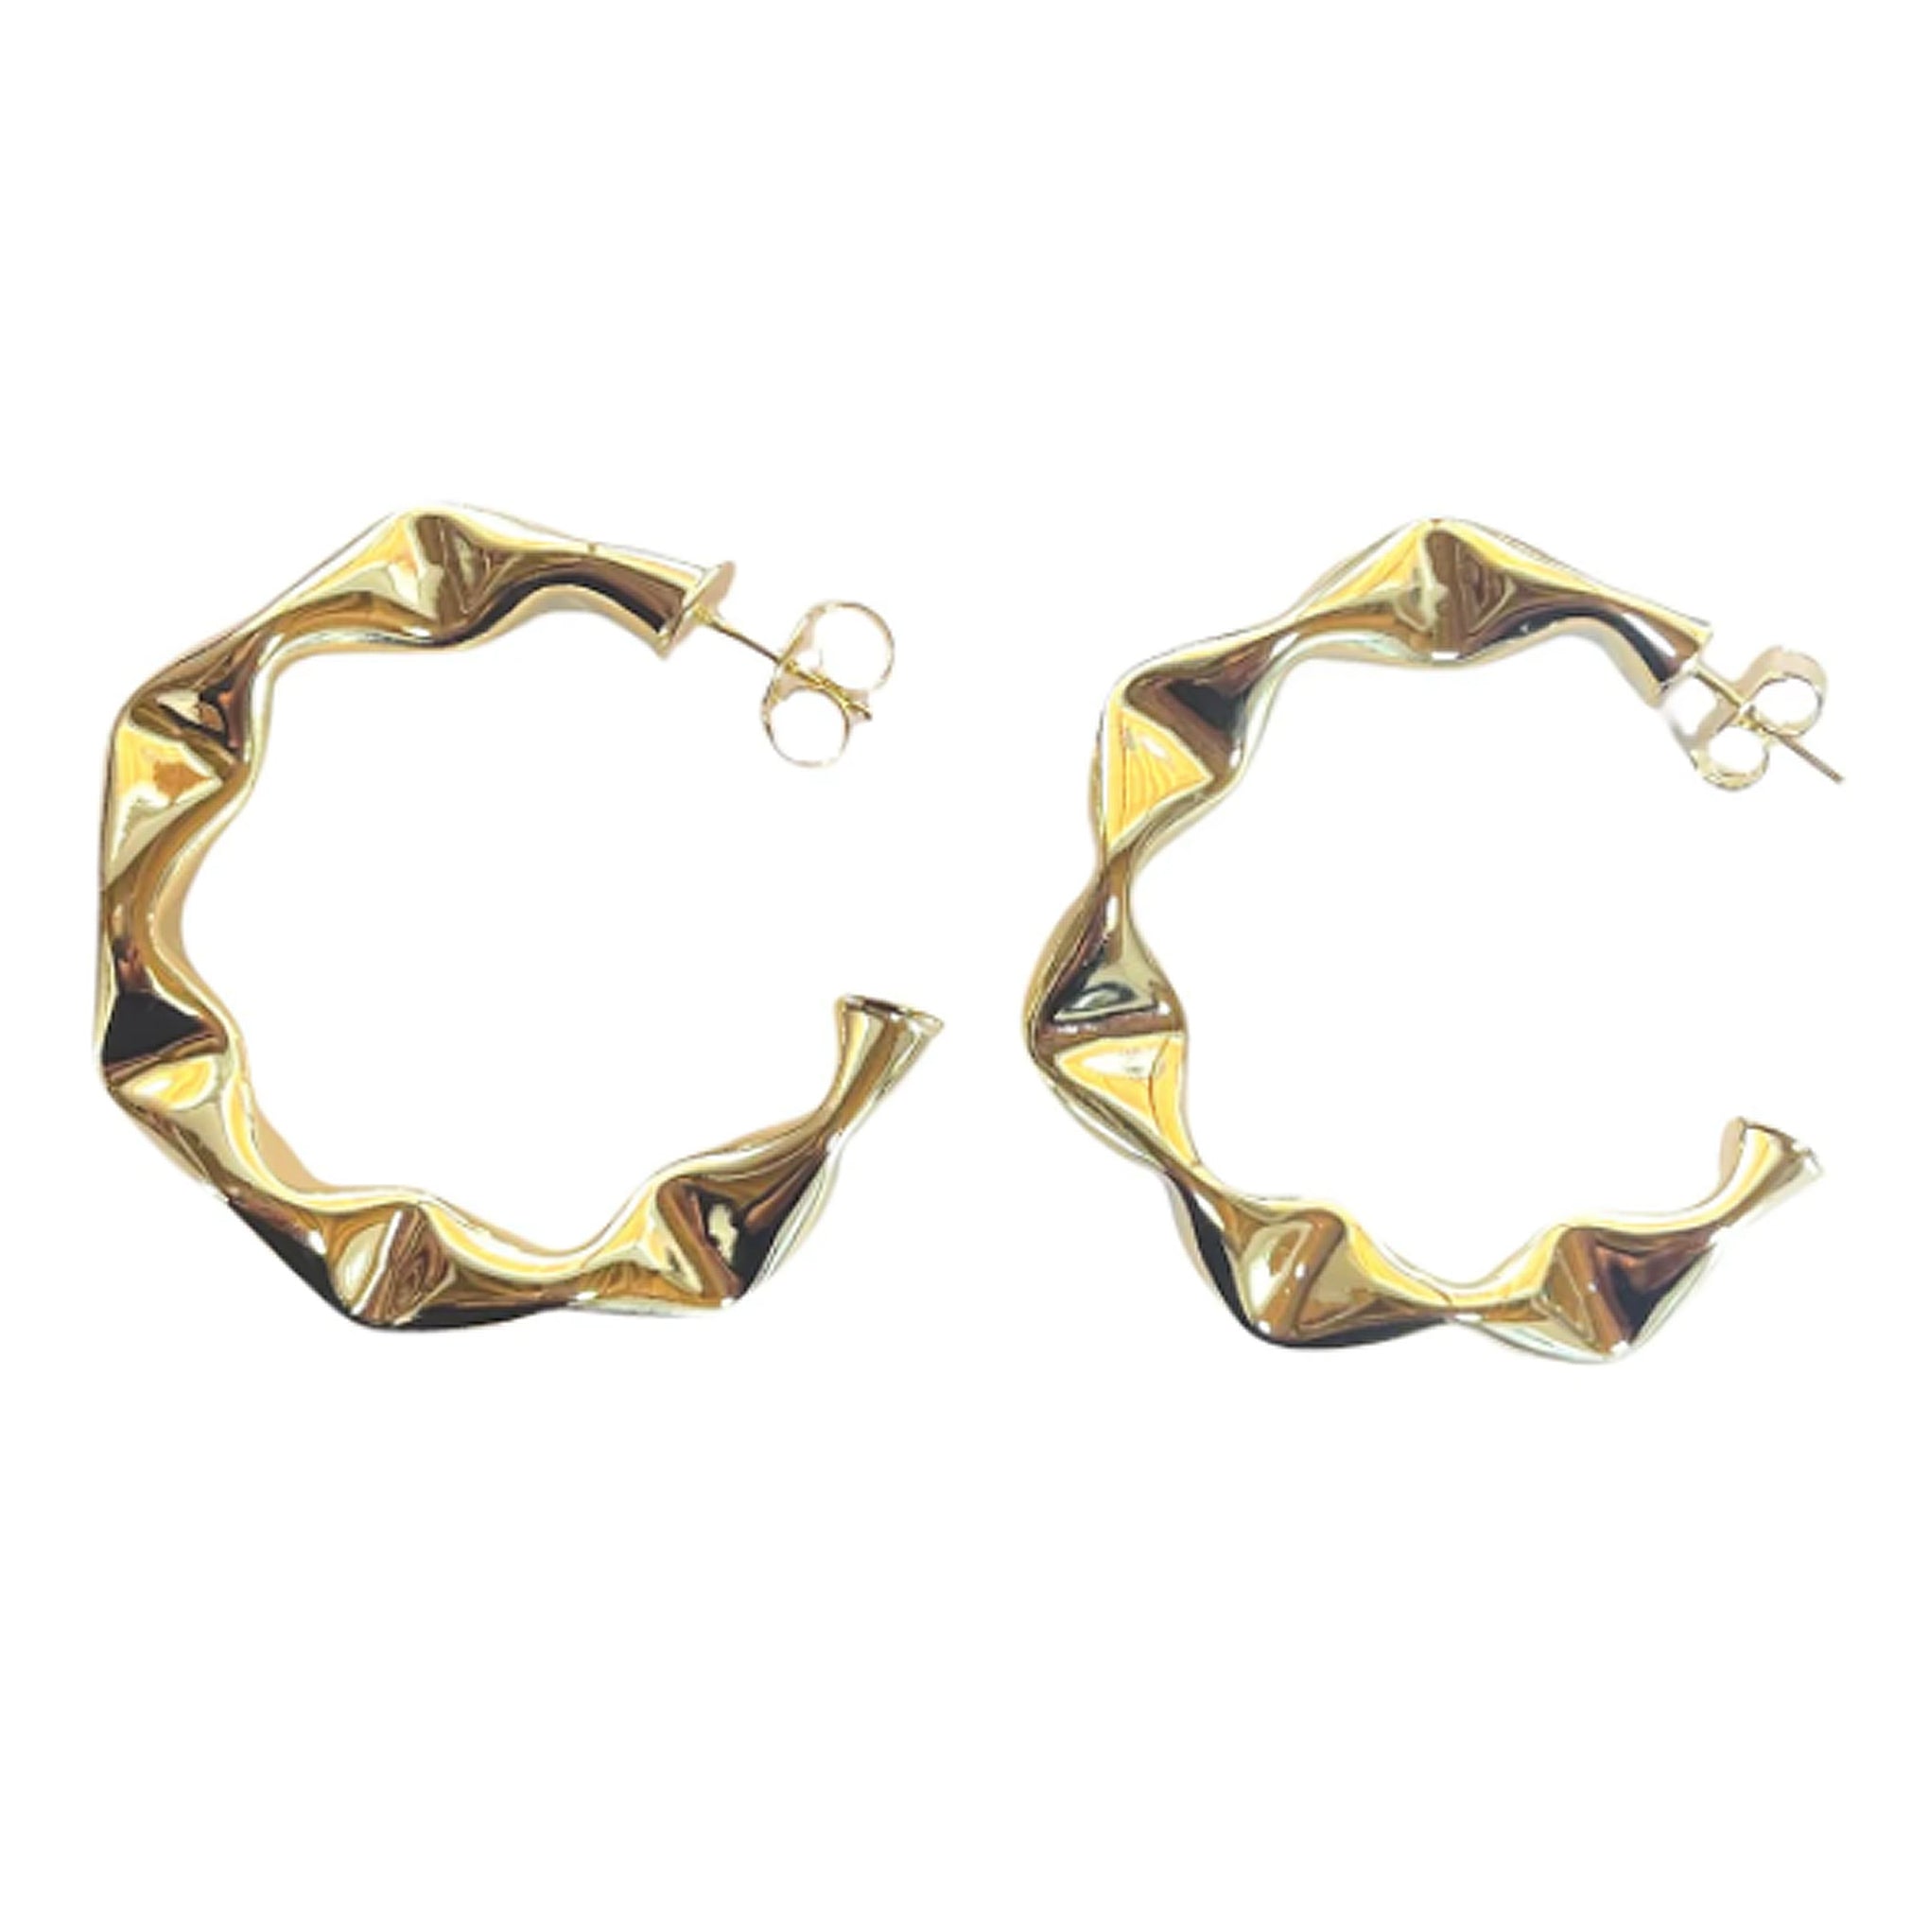 Sheila Fajl Wrinkled Hoop Earrings in Polished Gold Plated